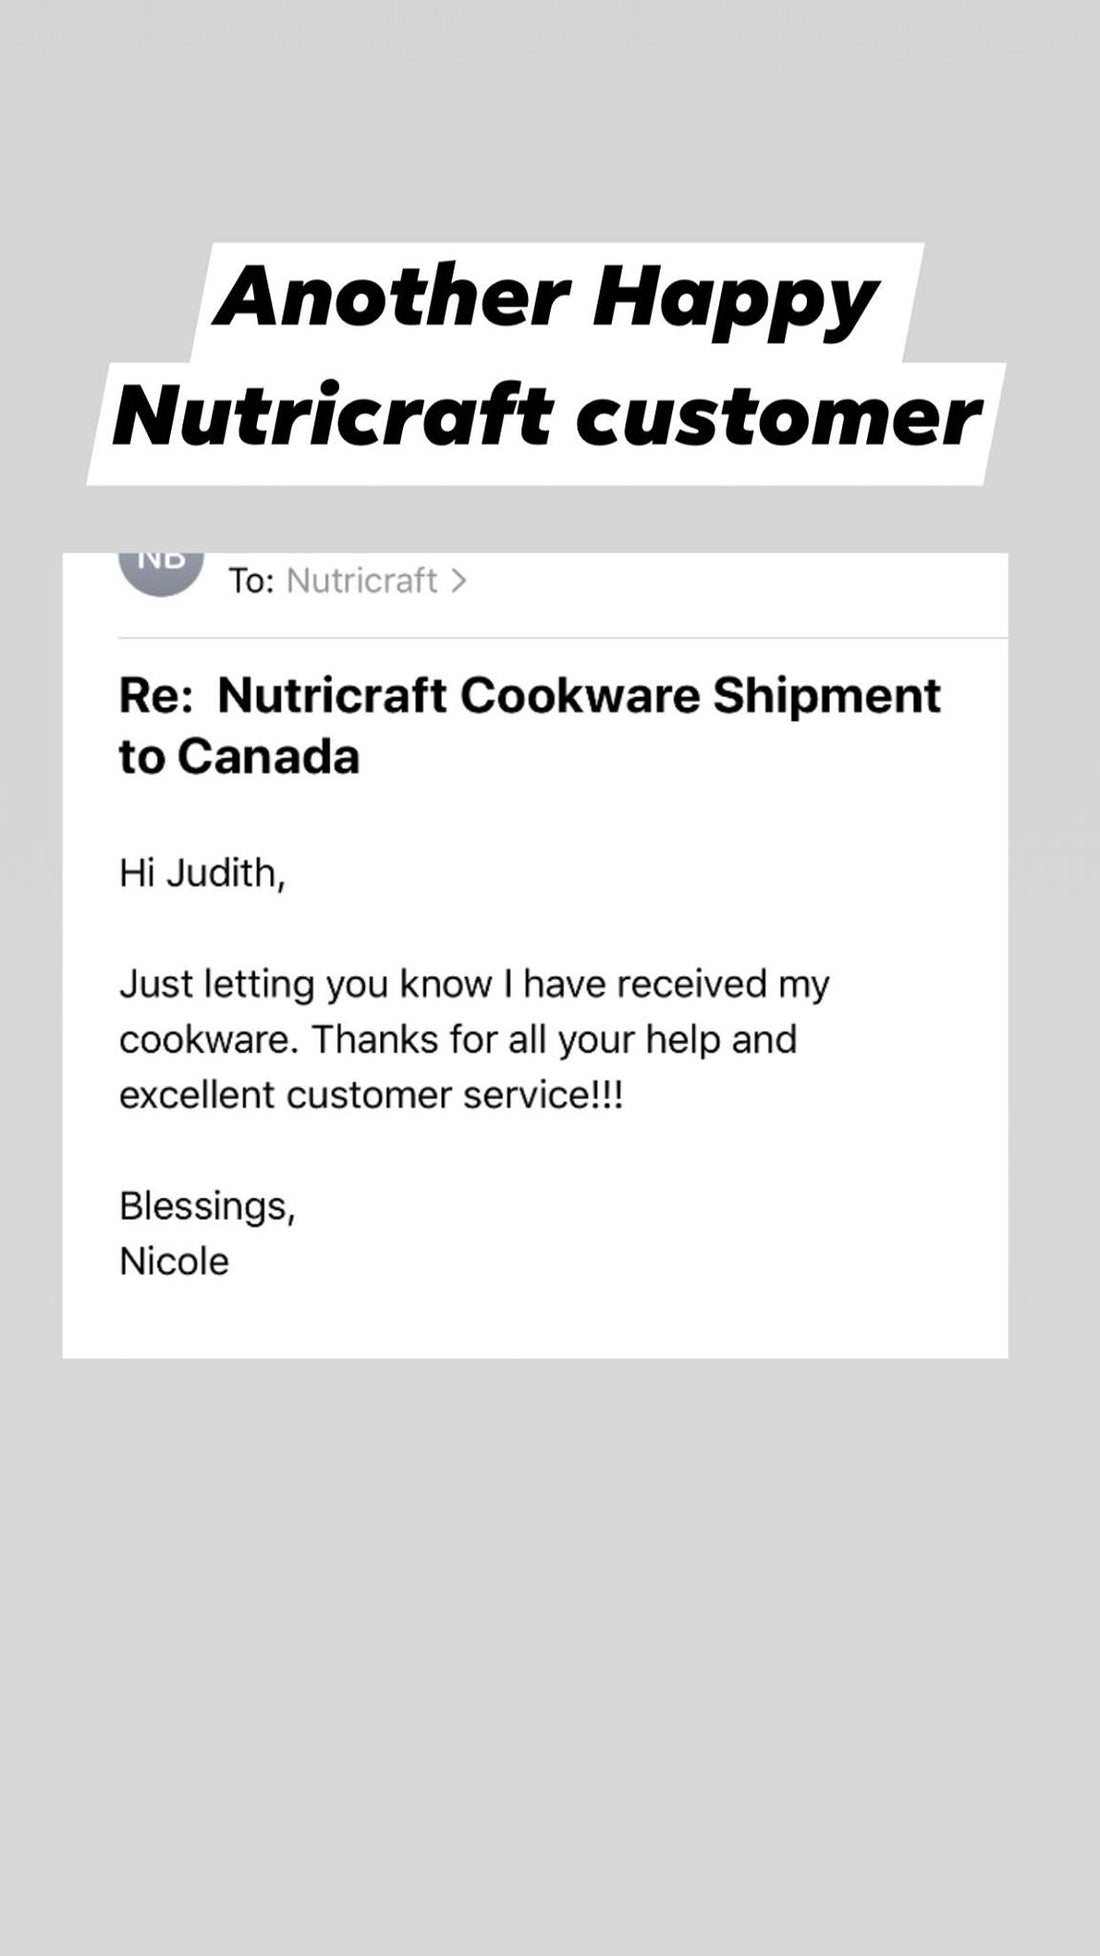 Another Happy Nutricraft Customer